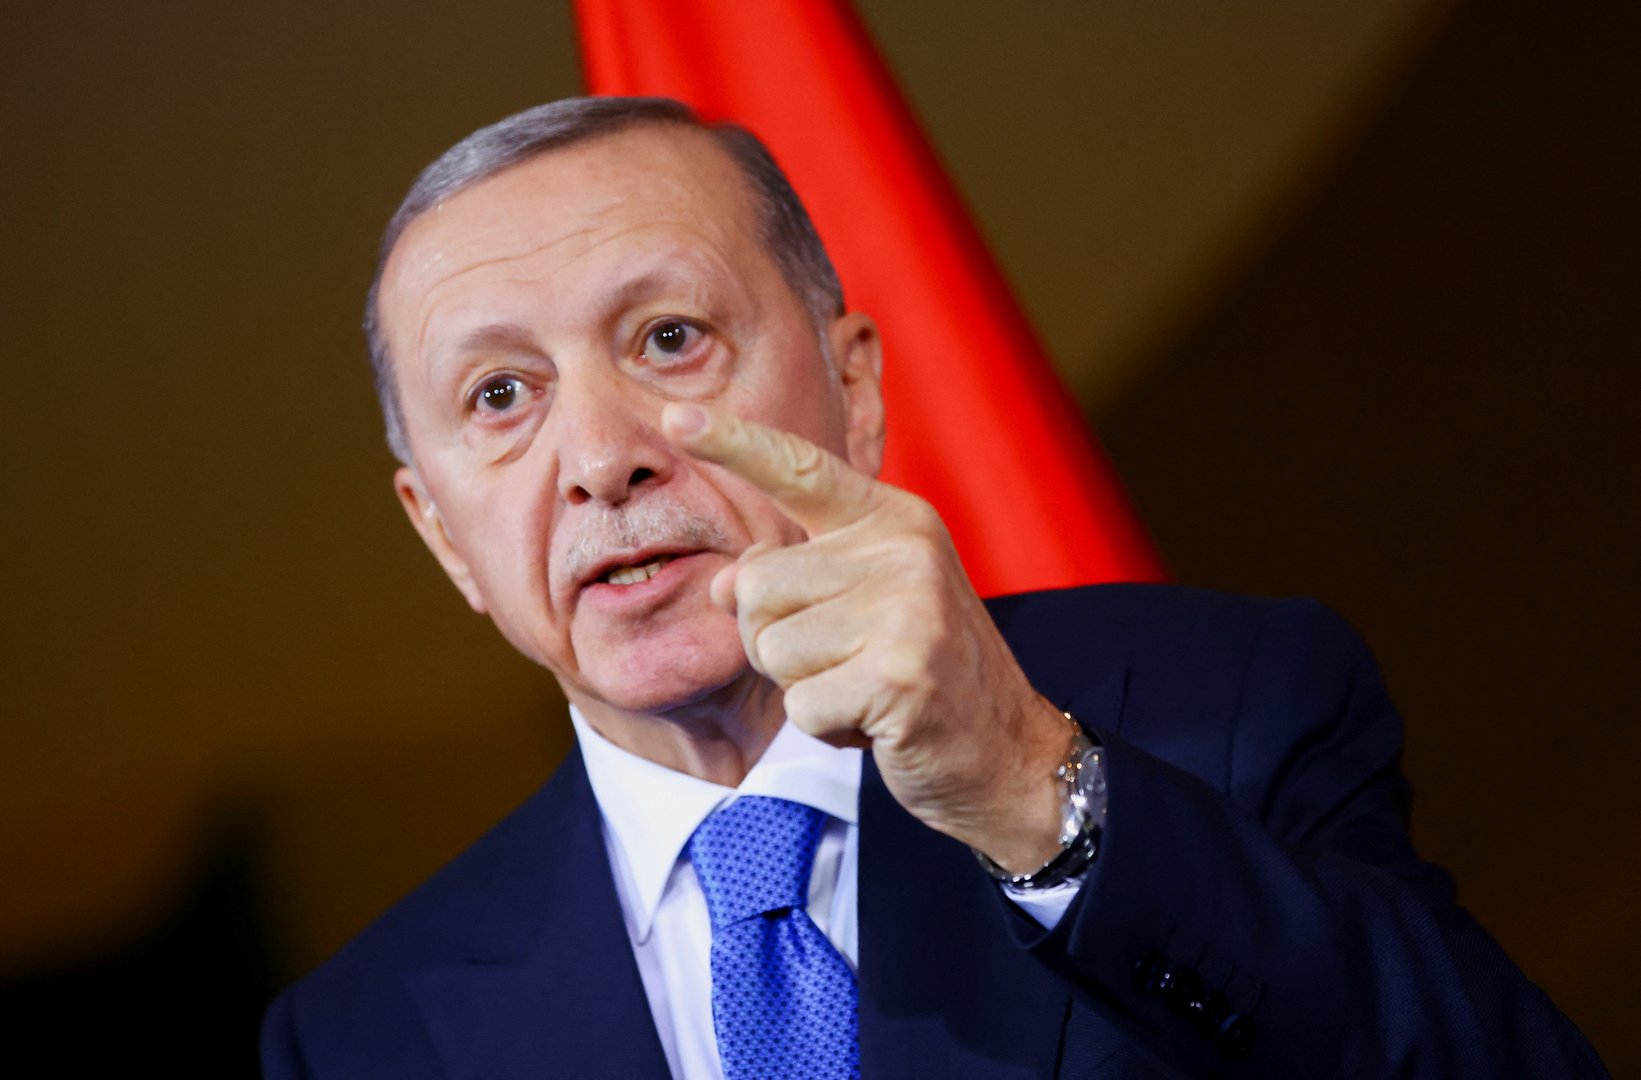 image Erdogan says Biden faces a test of sincerity in handling of the Gaza war